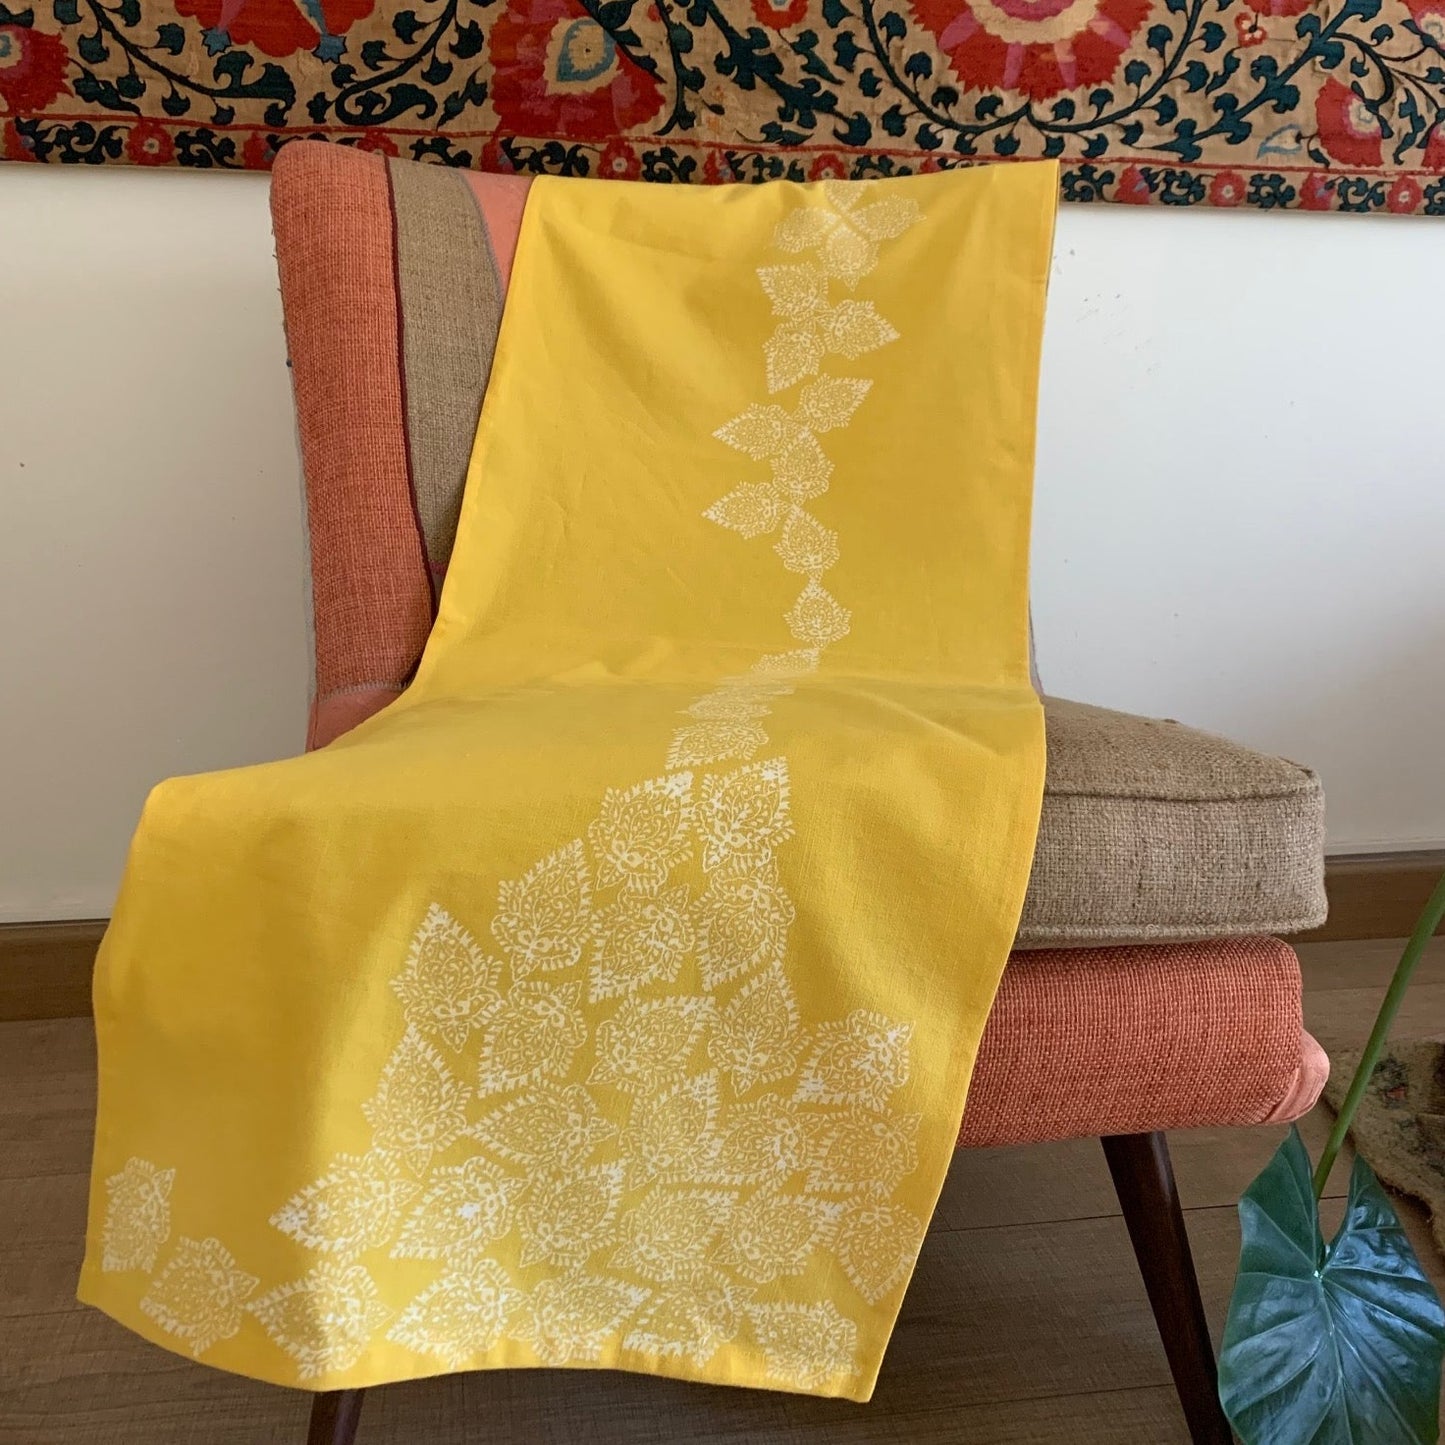 Handmade Yellow Flower Runner: A Burst of Joy for Your Home or Garden Party